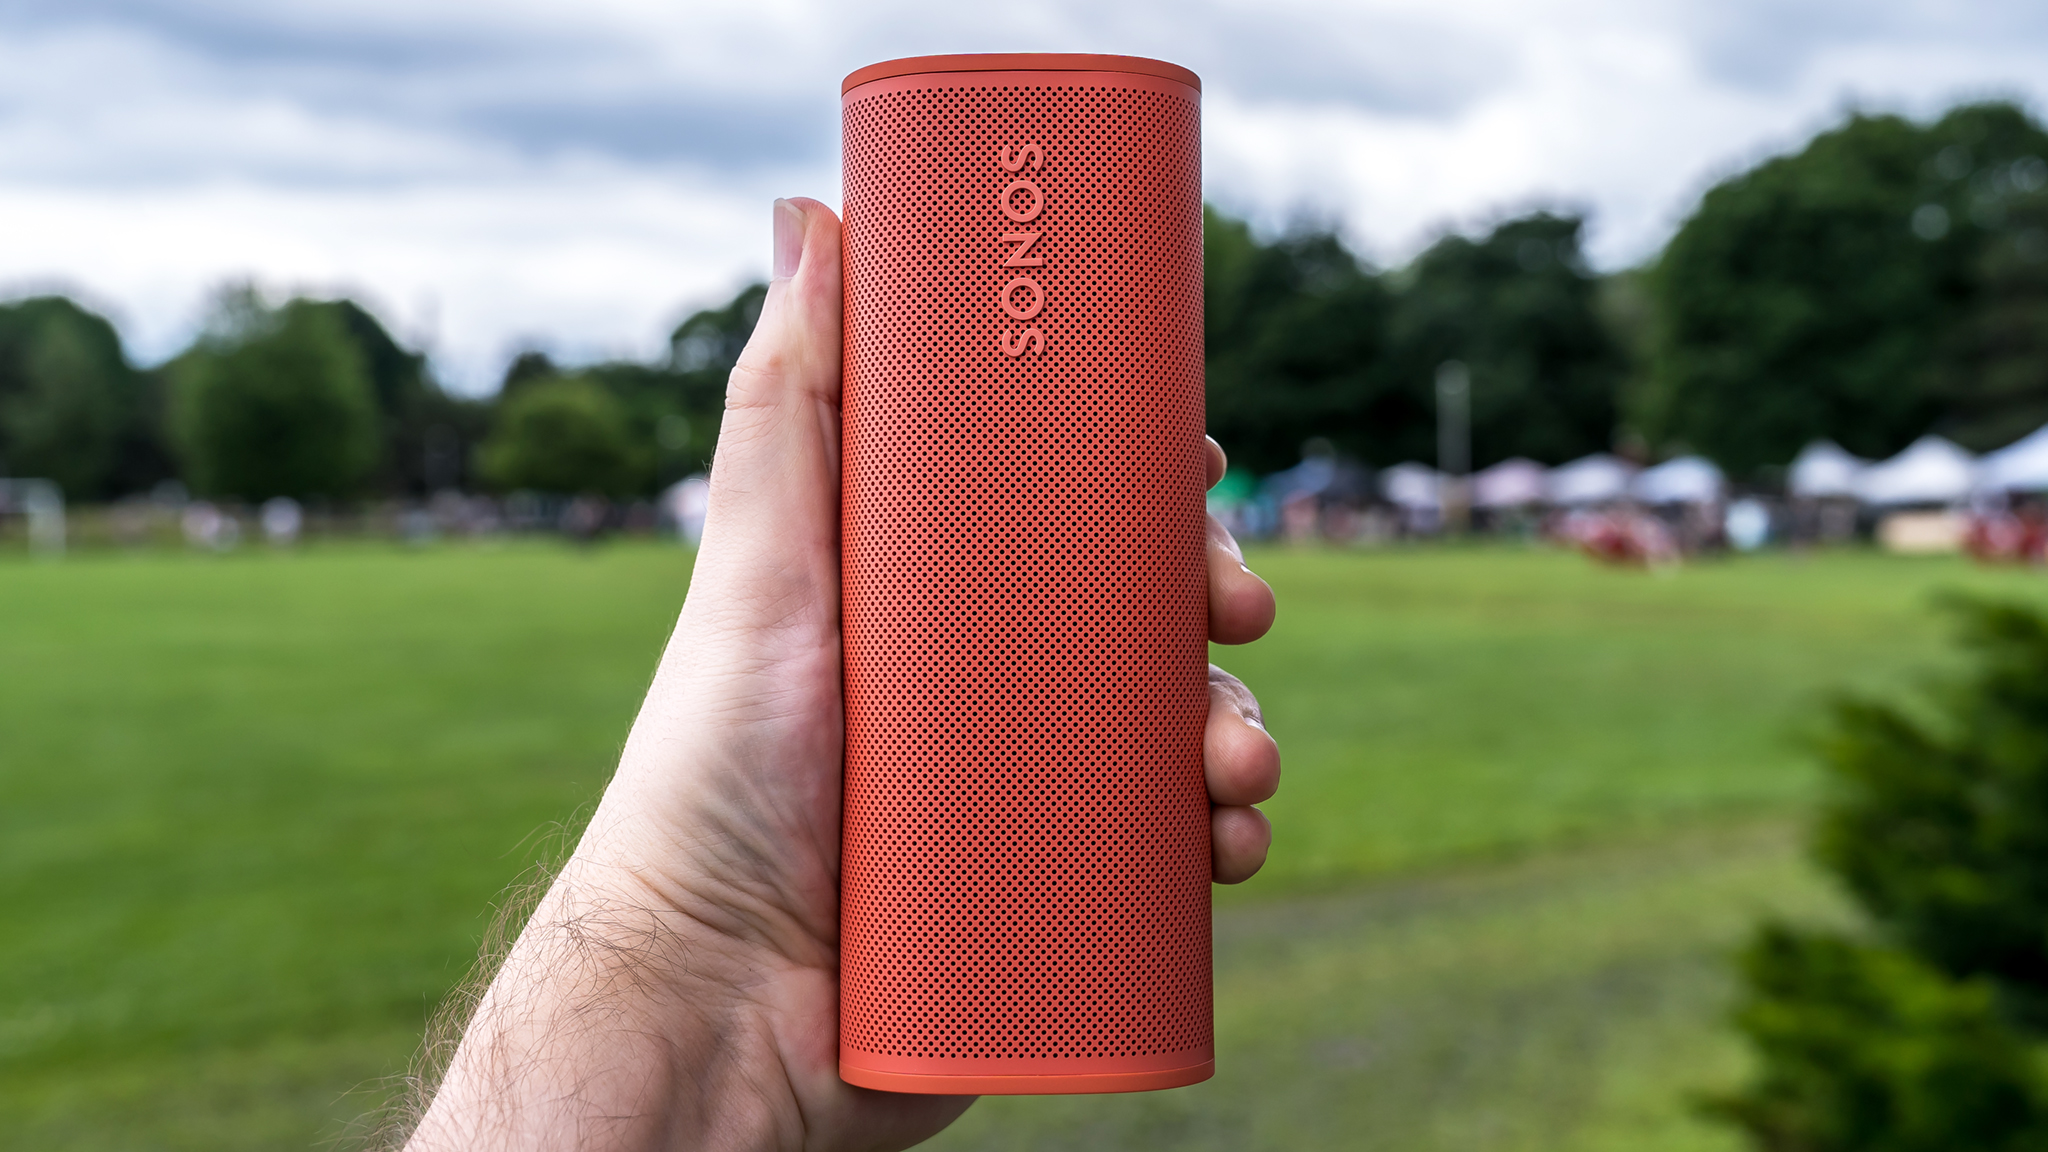 Sonos Roam 2 speaker in hand at park.